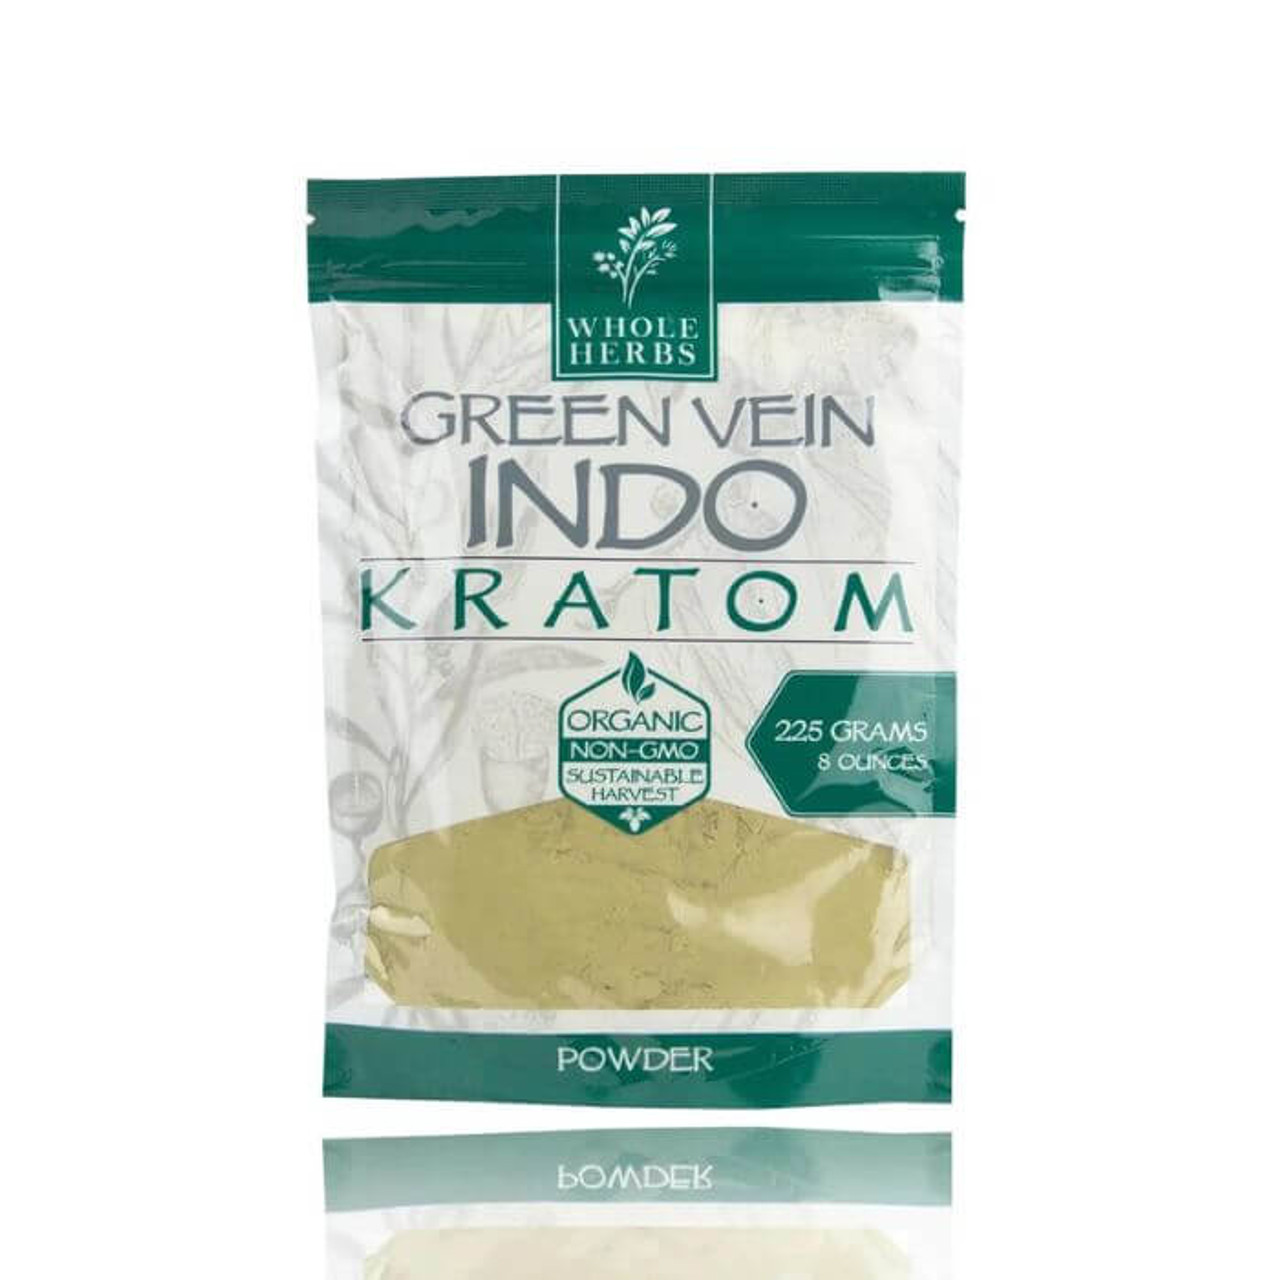 Whole Herbs Green Vein Indo Kratom